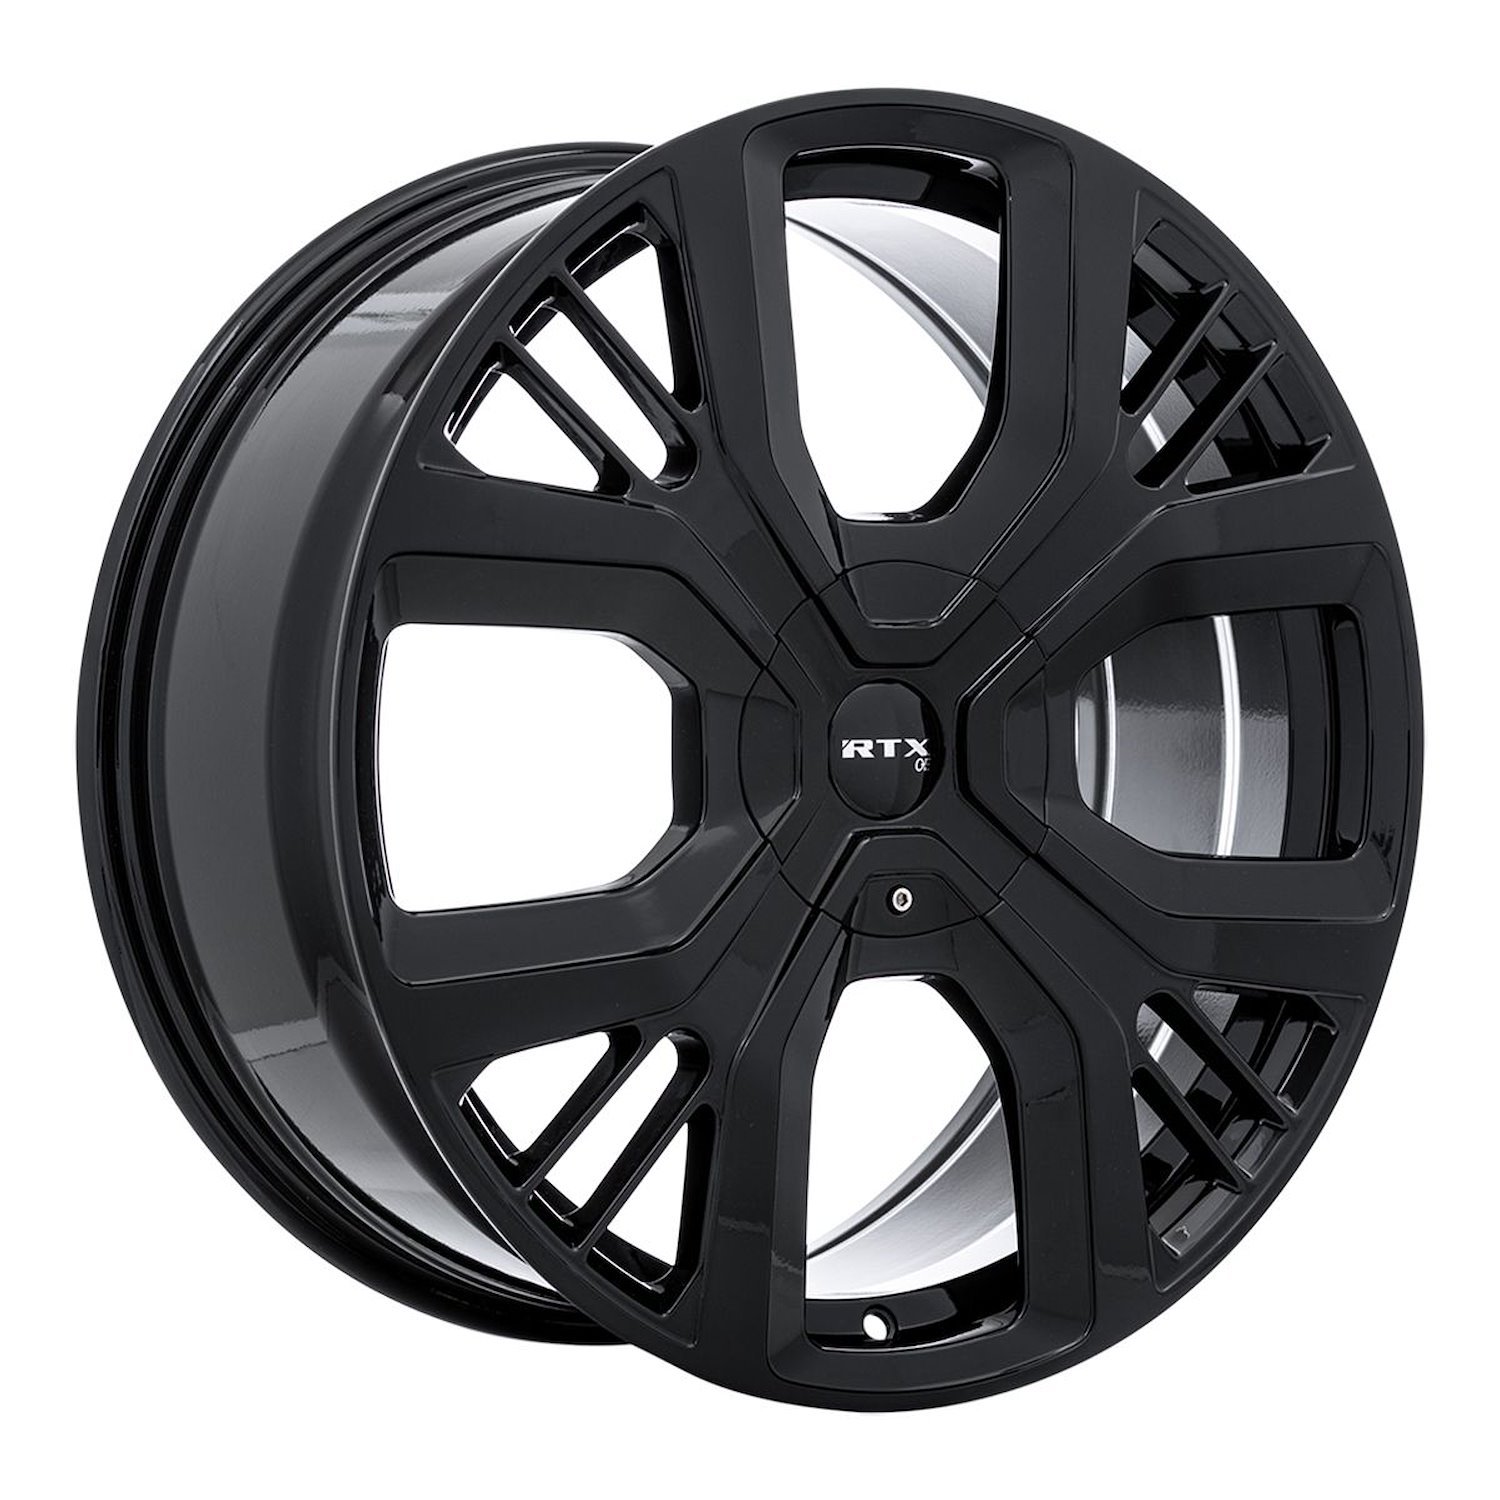 083172 OE-Series PS-01 Wheel [Size: 20" x 8"] Gloss Black Finish